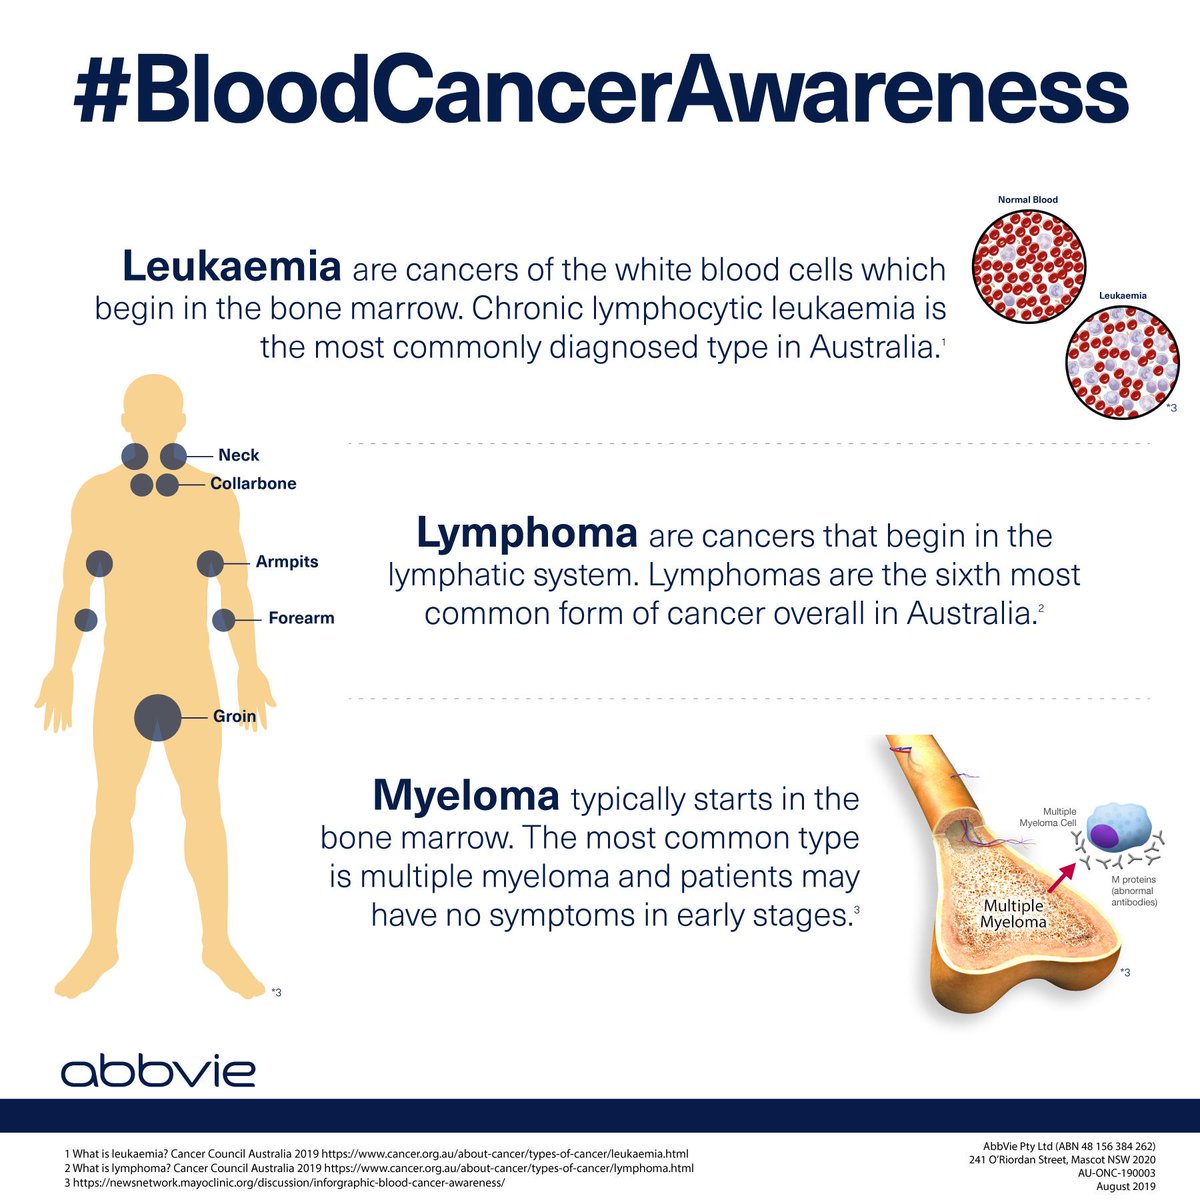 blood cancer types